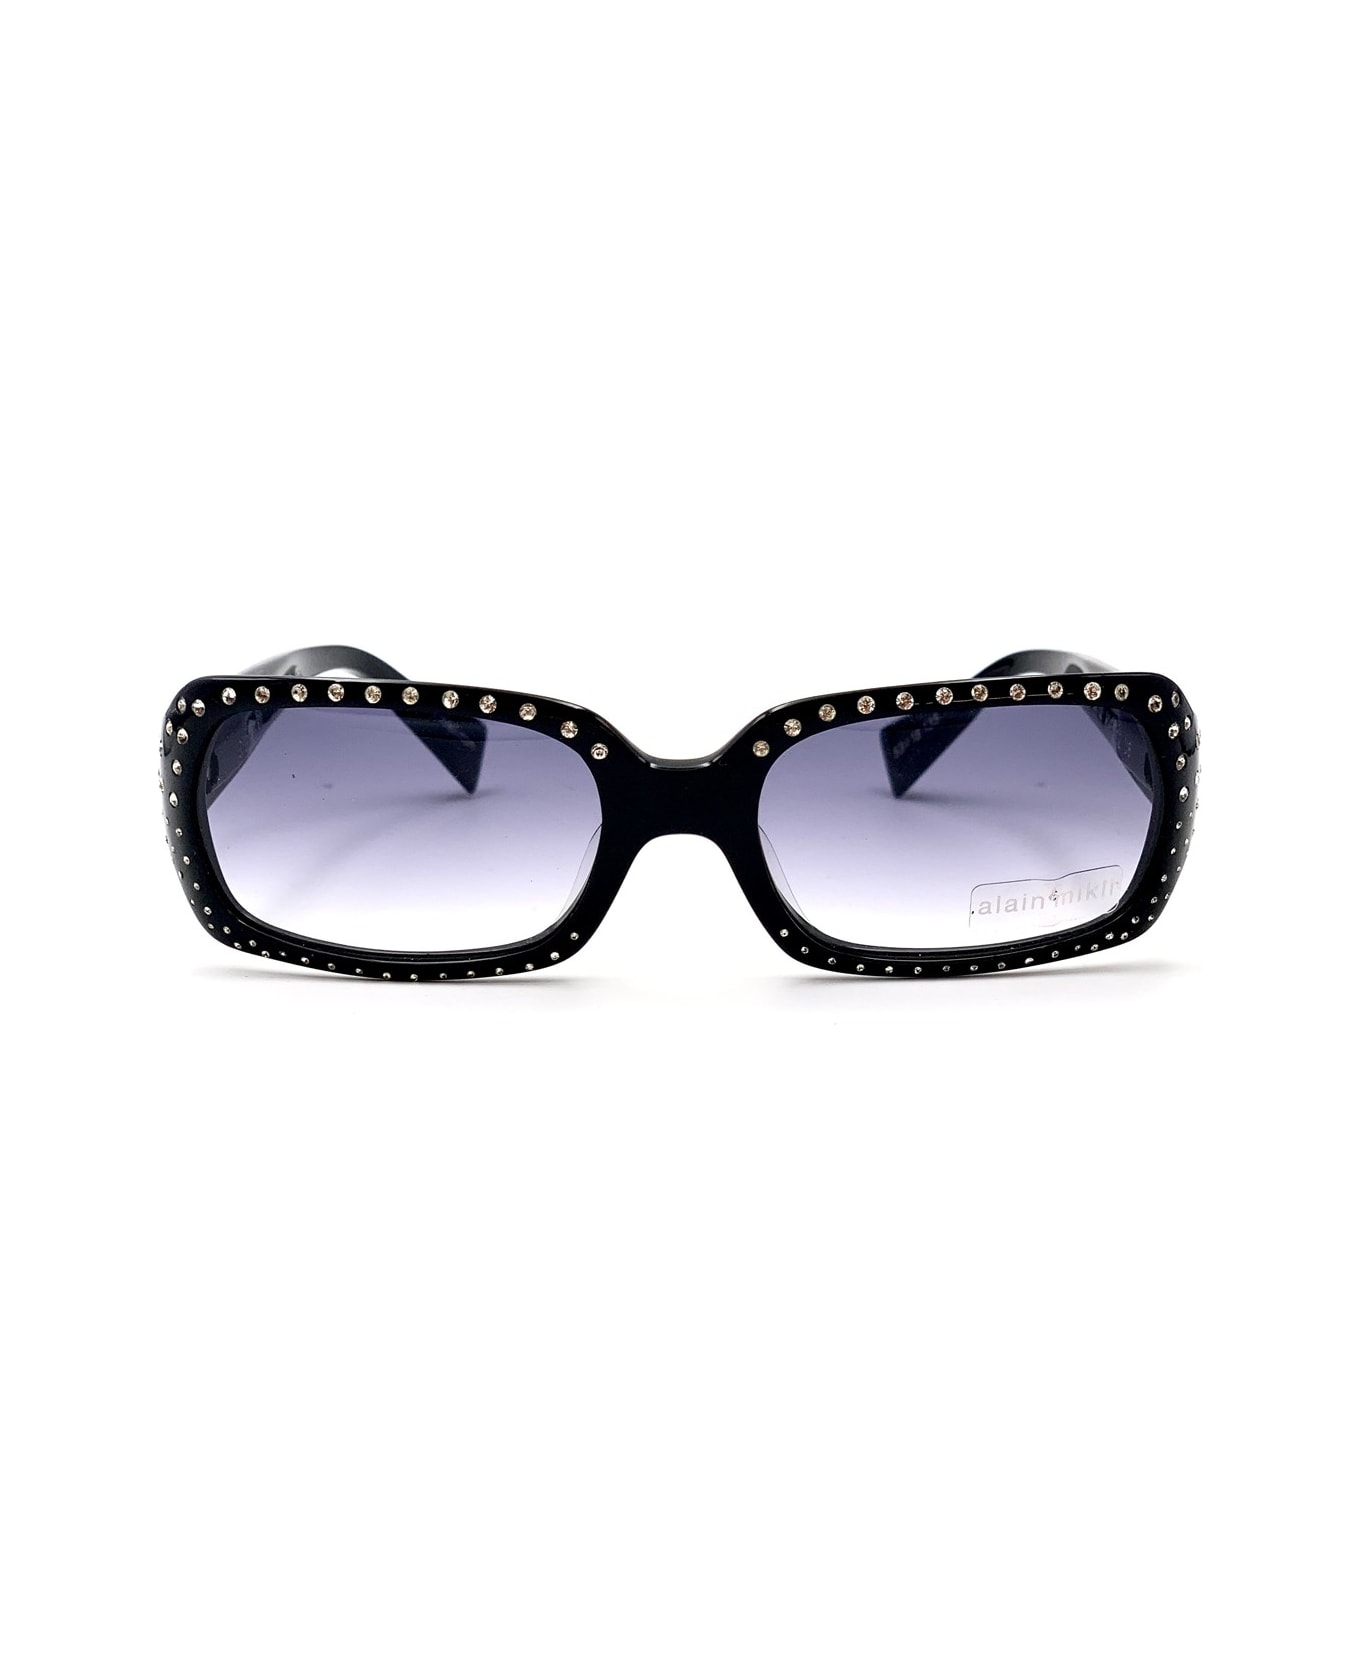 Alain Mikli A0495 Sunglasses - Nero サングラス